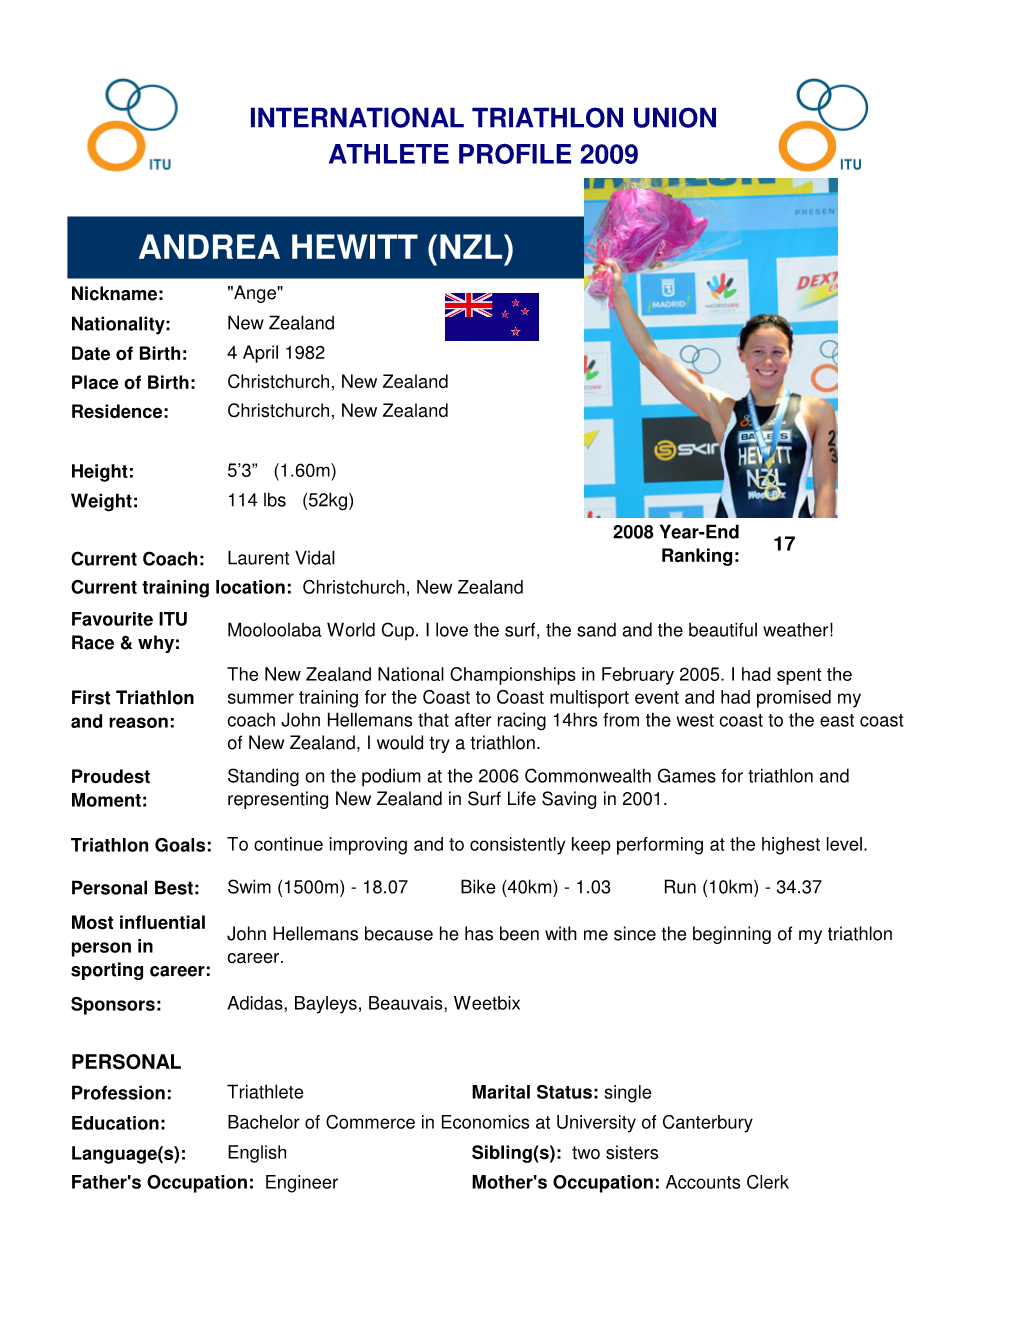 Andrea Hewitt Profile